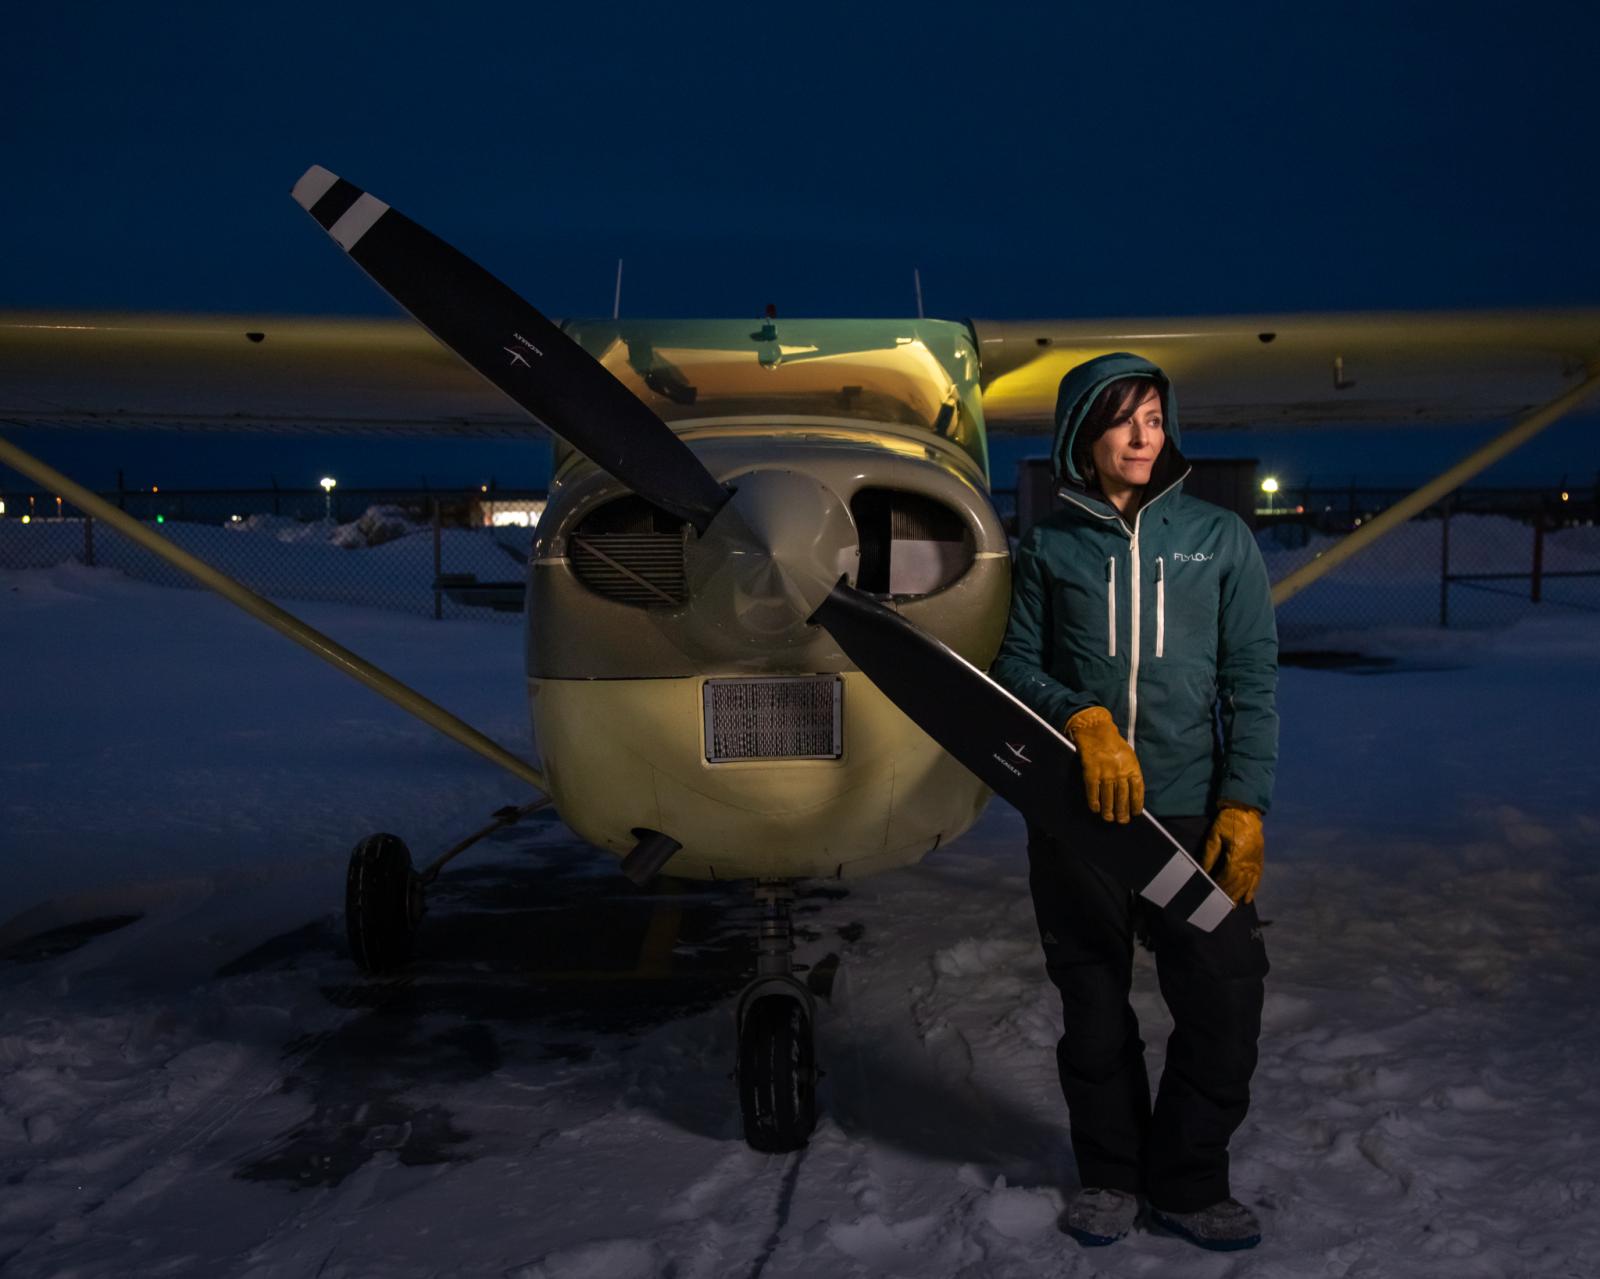 Jamie Klaes, 41, in her Cessna ...e aviation community." USA